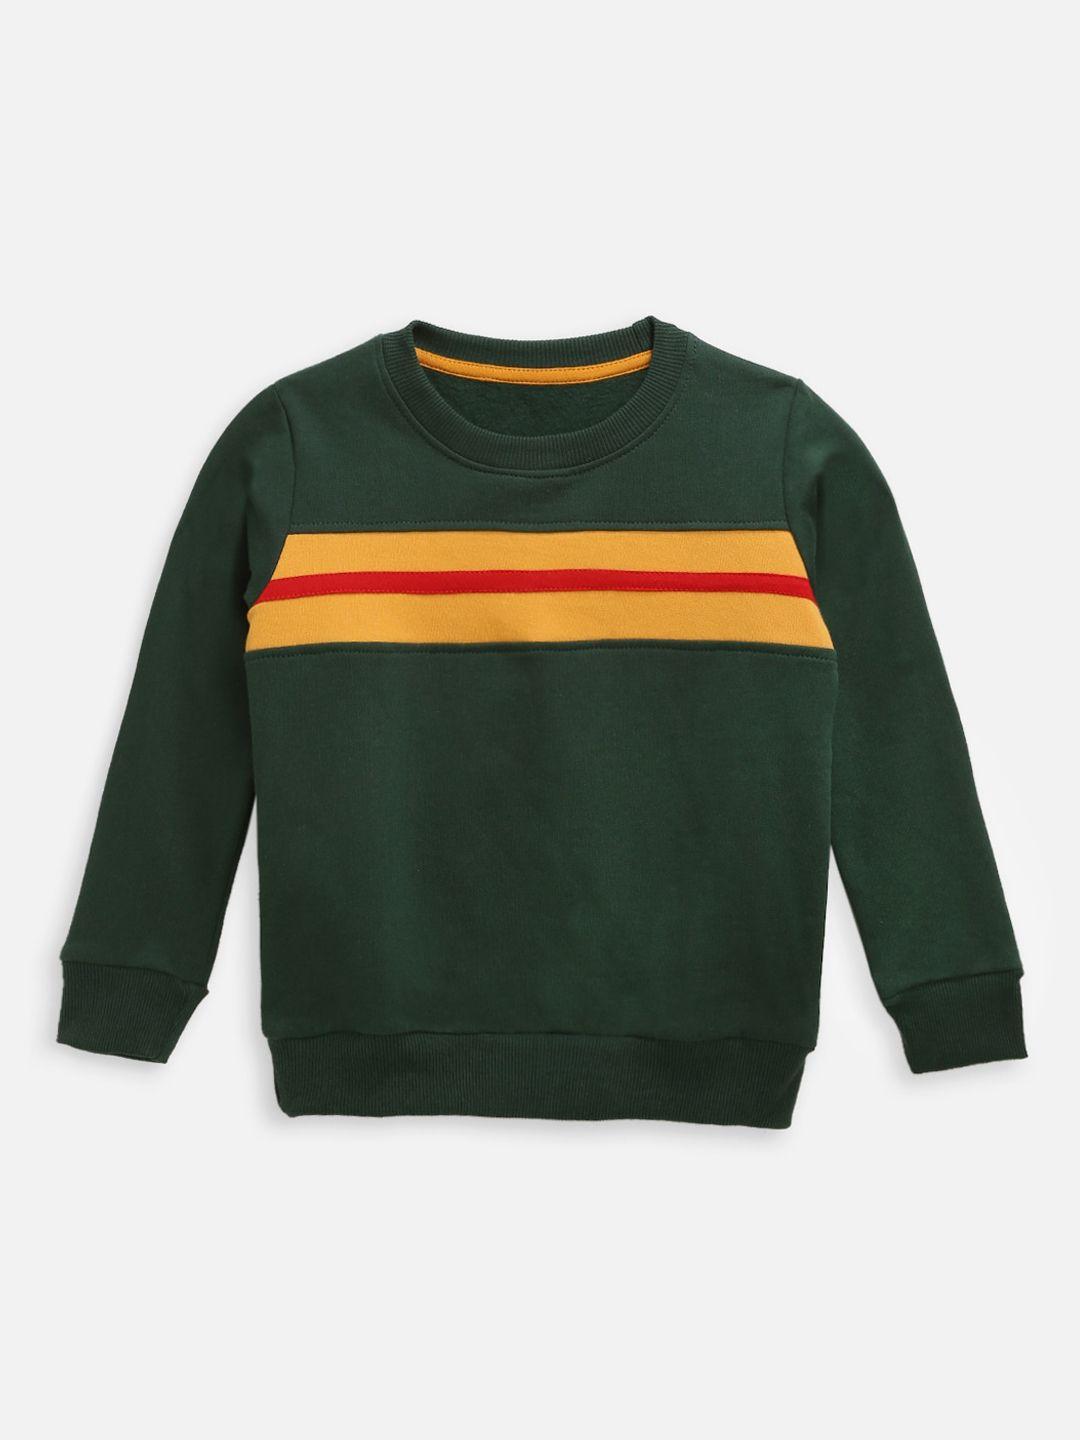 yk boys green striped sweatshirt